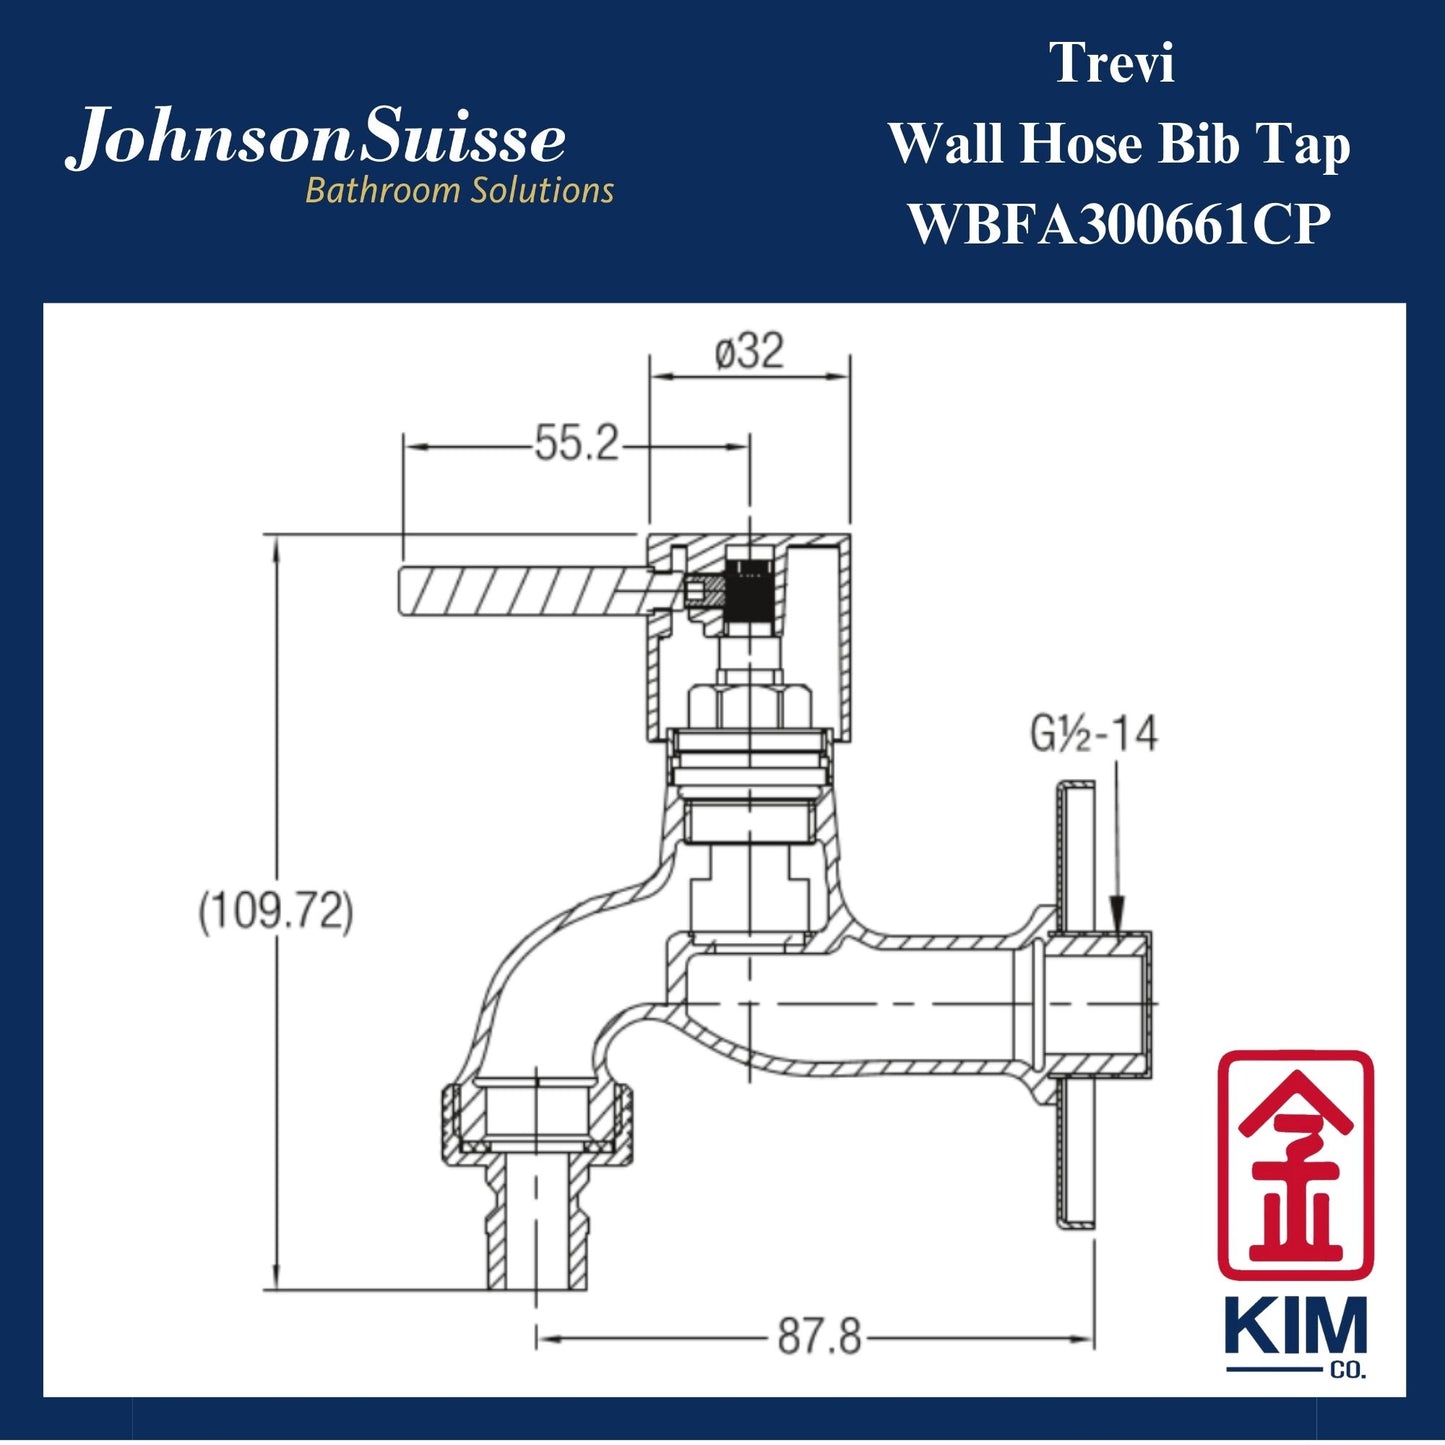 Johnson Suisse Trevi Wall Hose Bib Tap (WBFA300661CP)